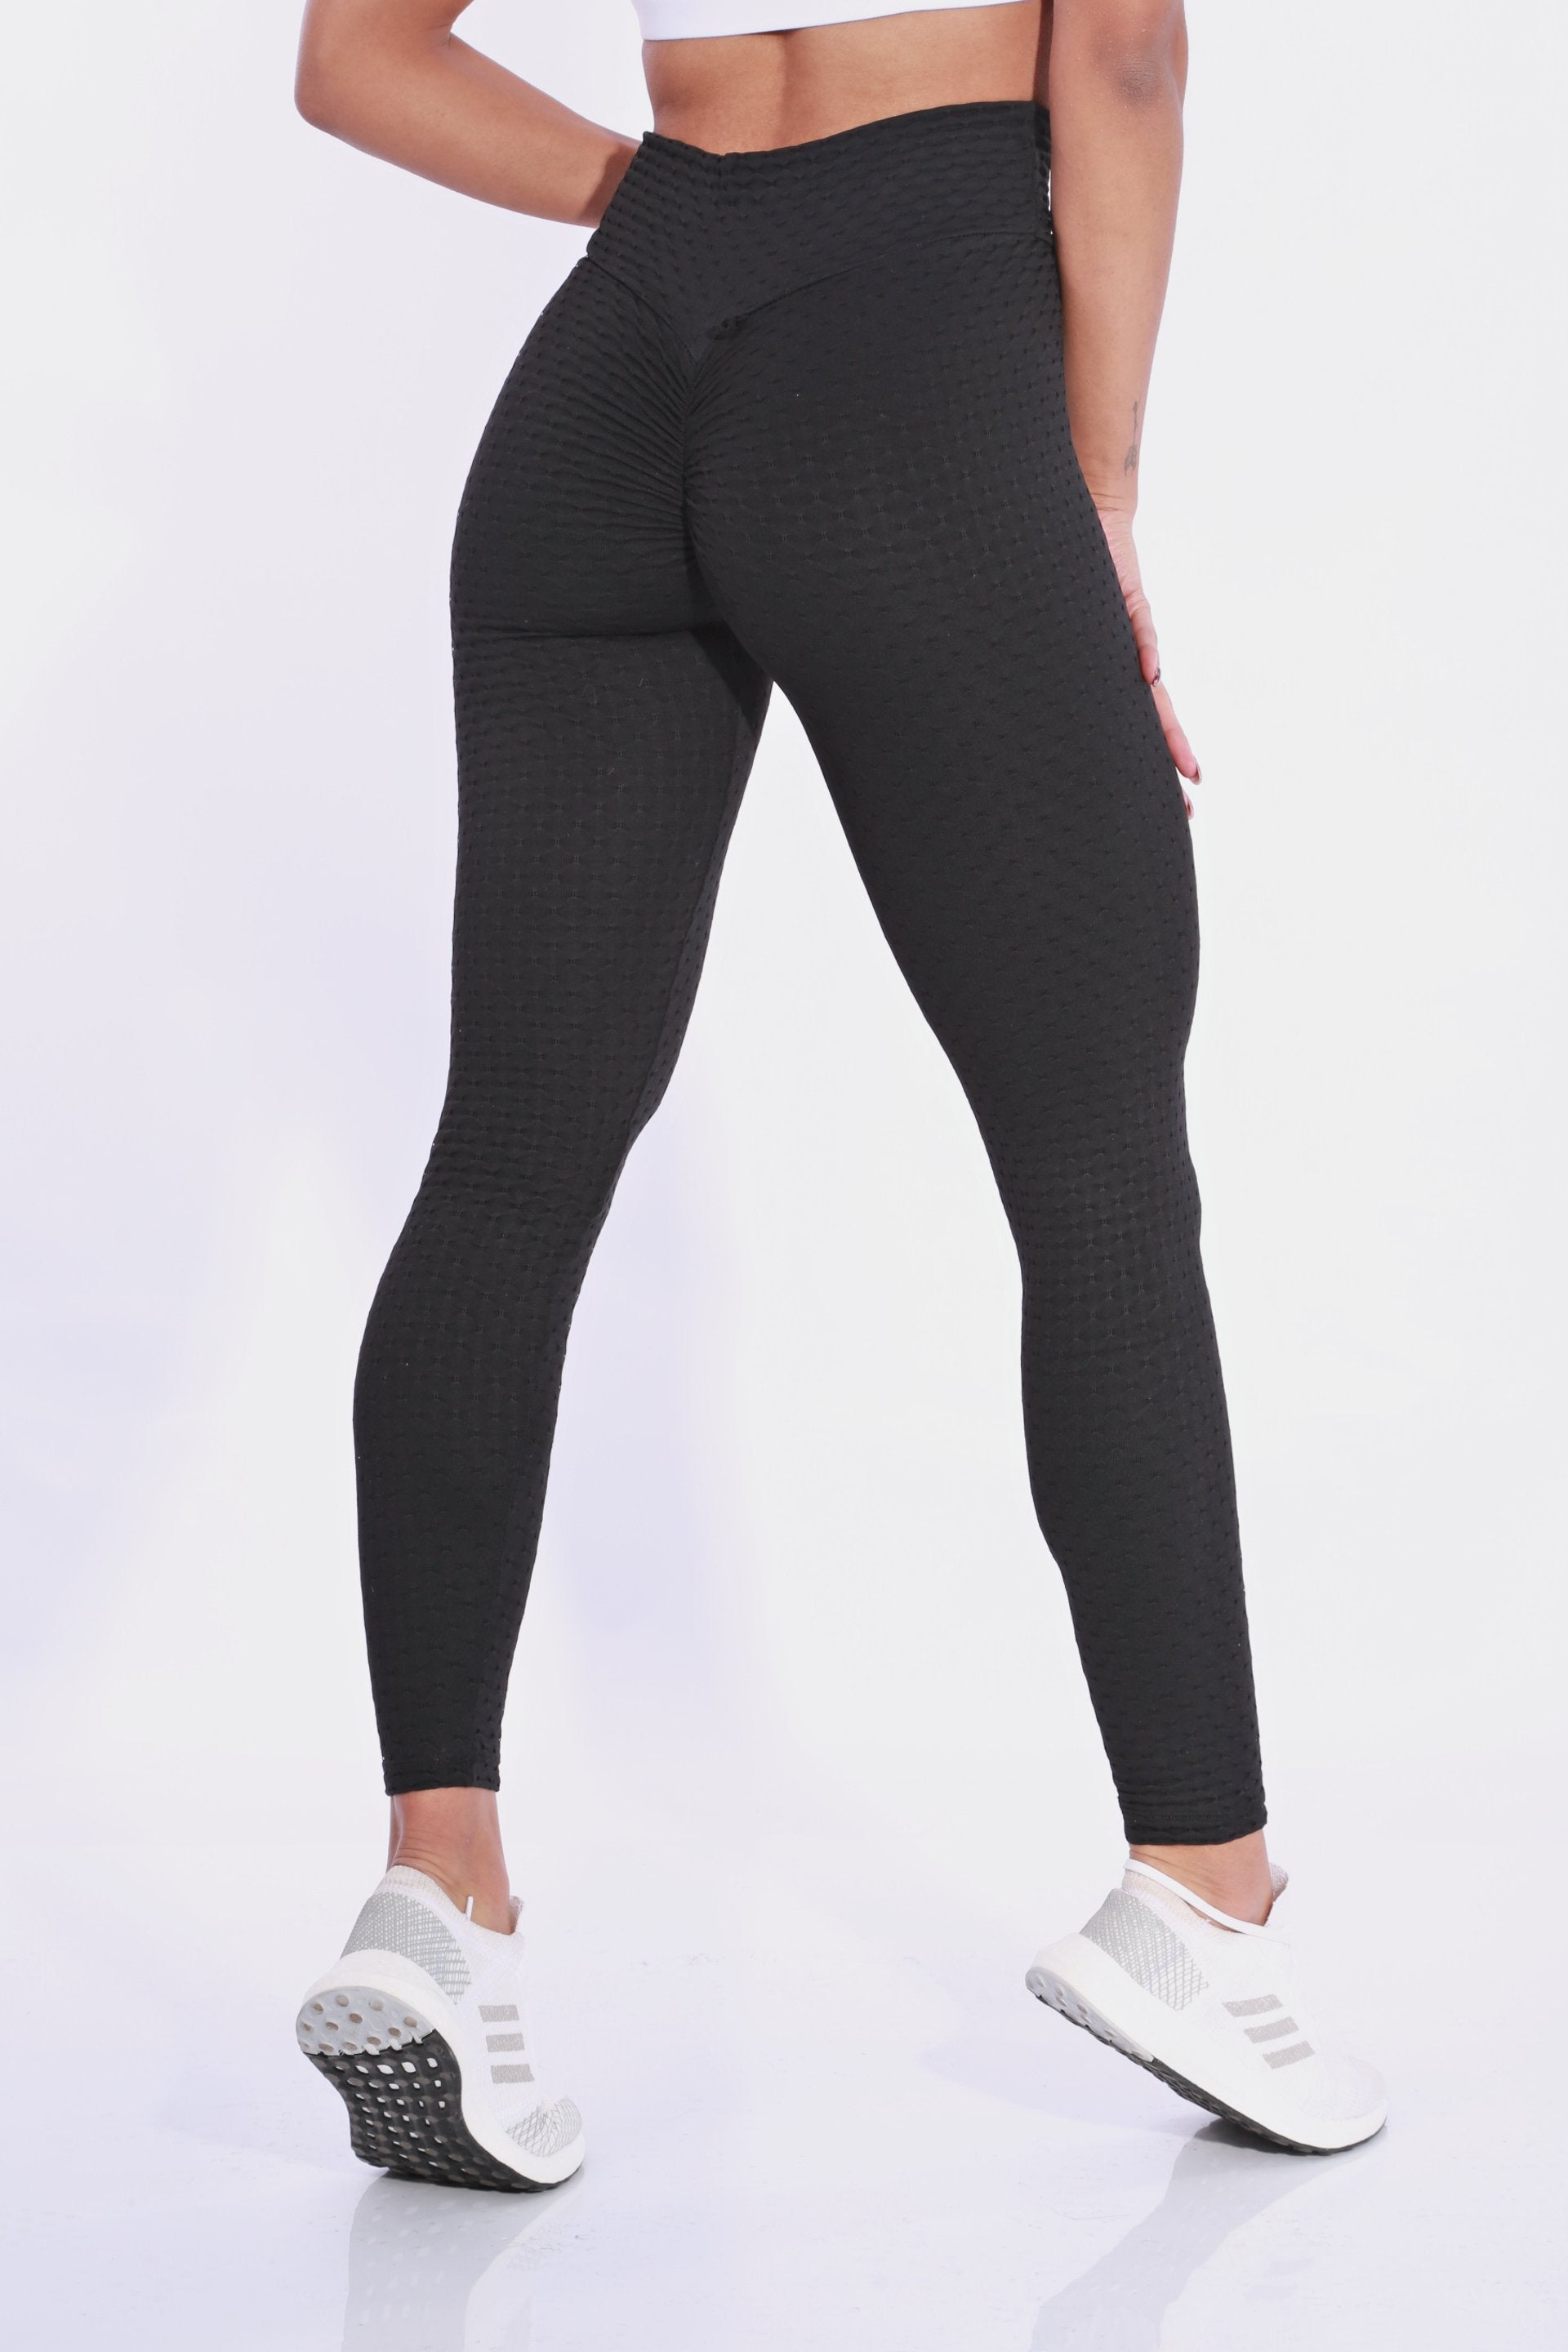 Image of Wonderfit Cheeky AKA ‘Tik Tok Pants’ - Anti cellulite leggings - Black